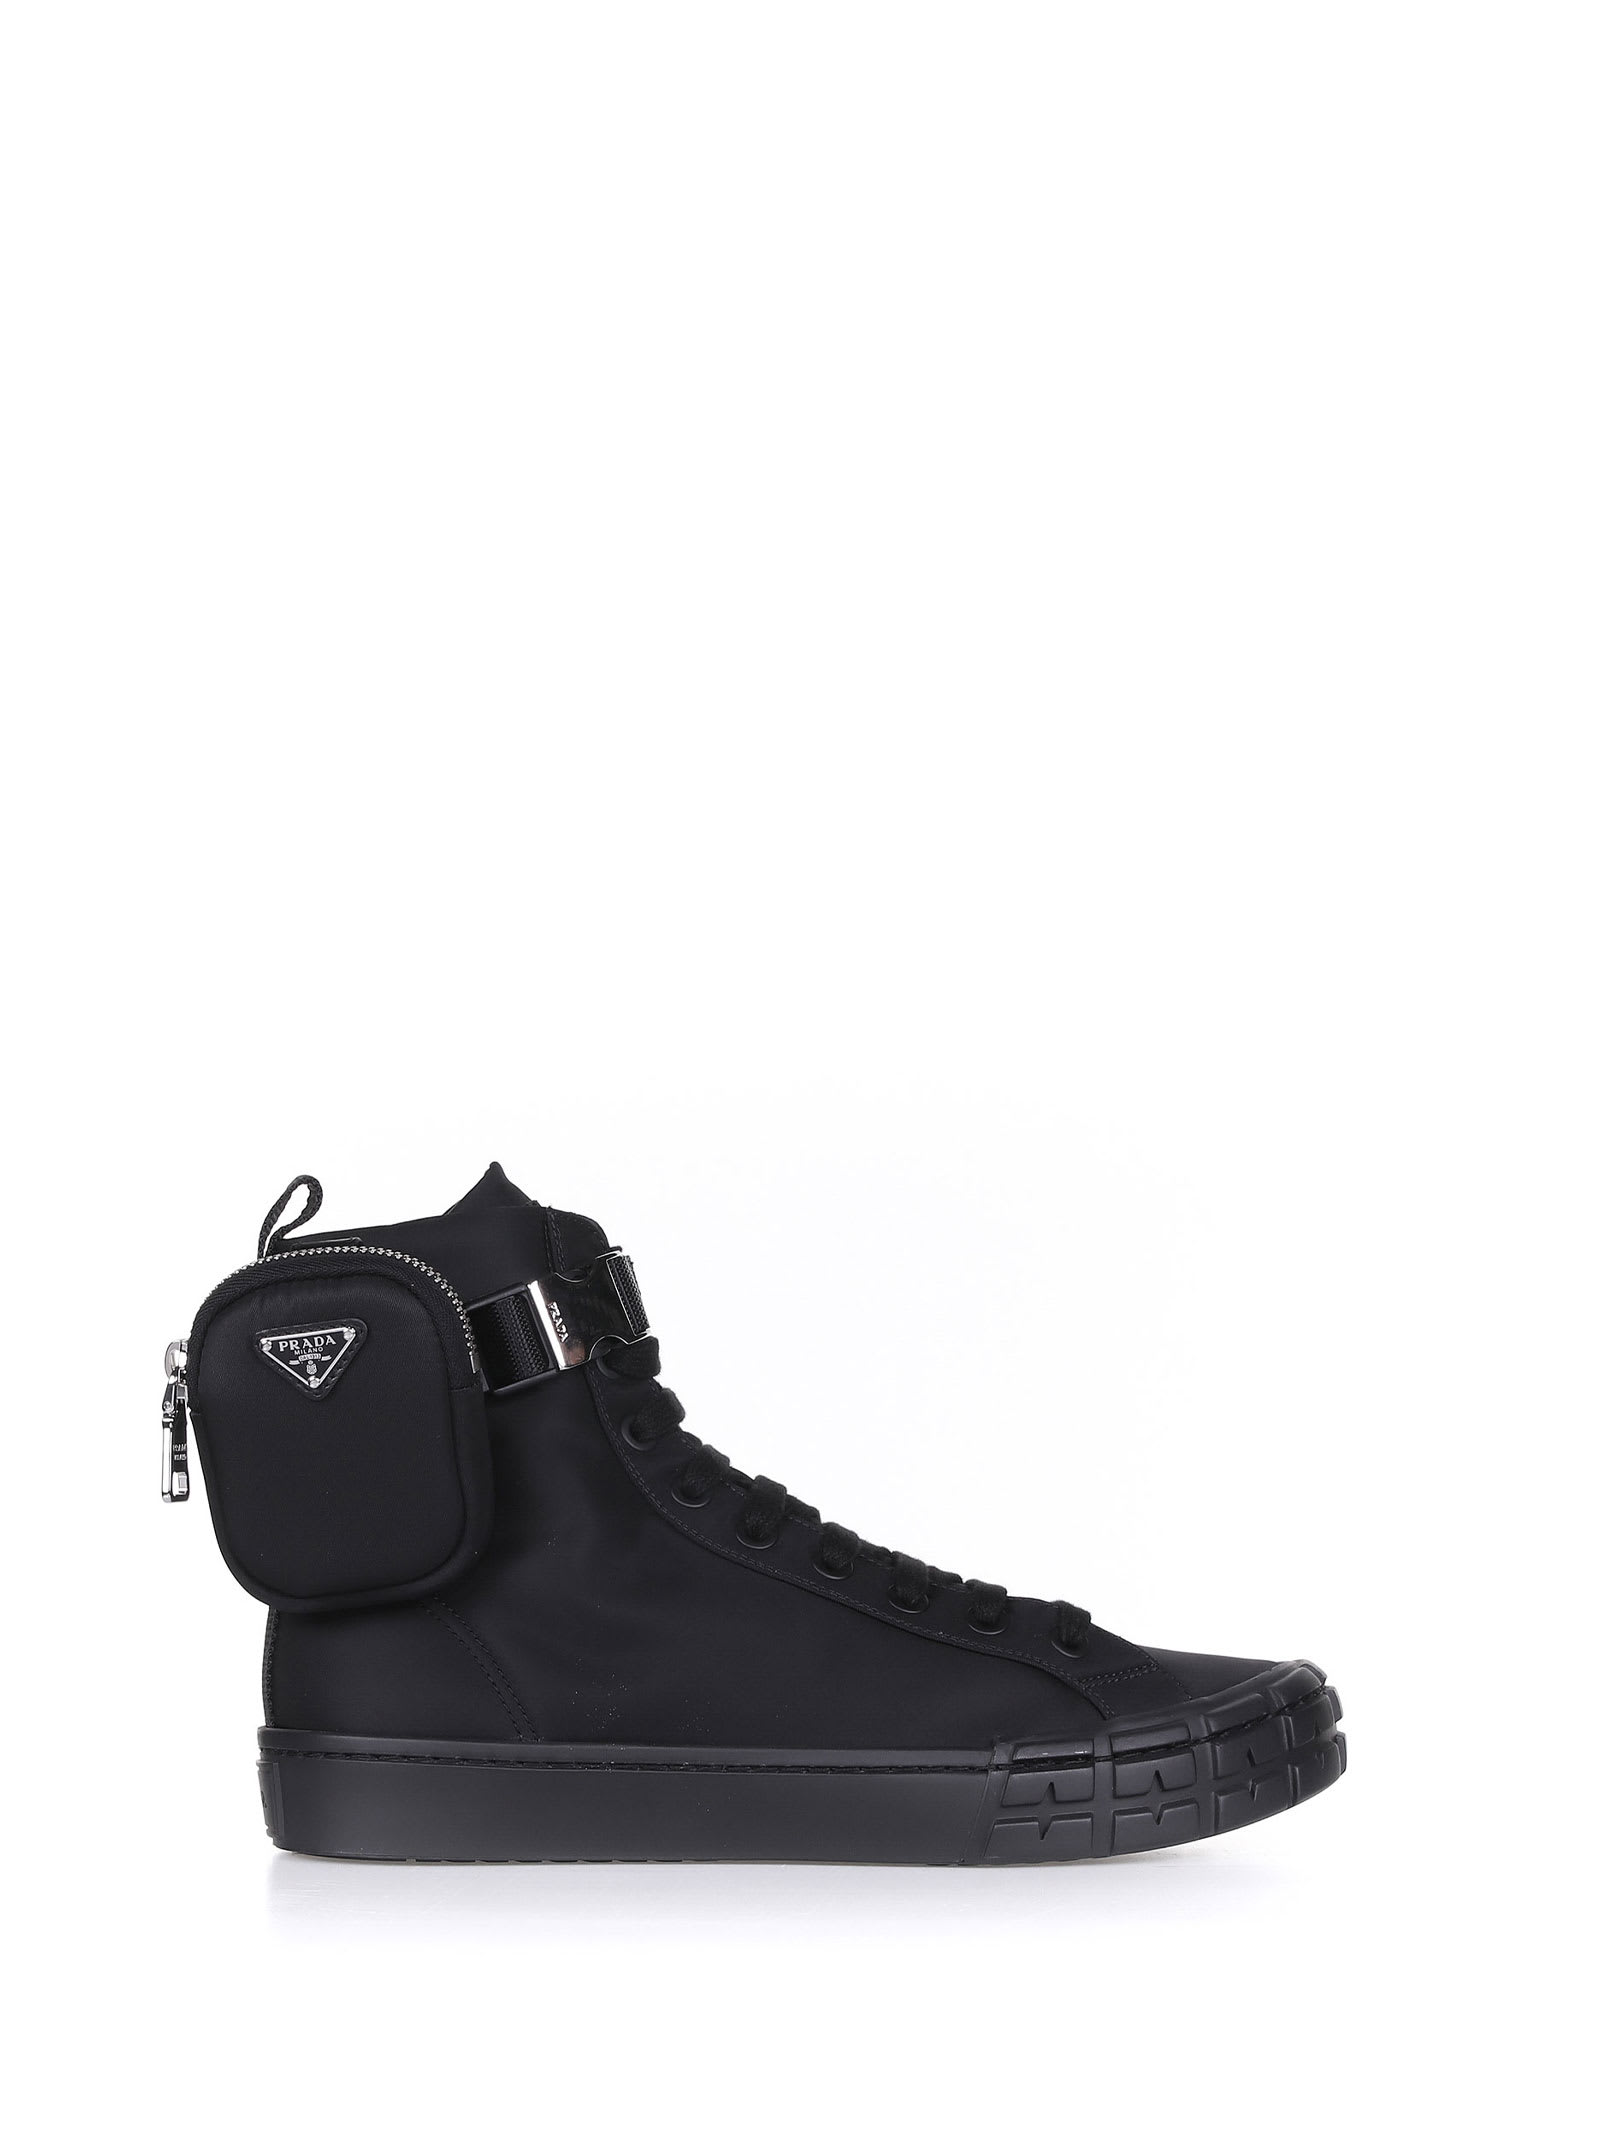 Prada Wheel Sneaker Black